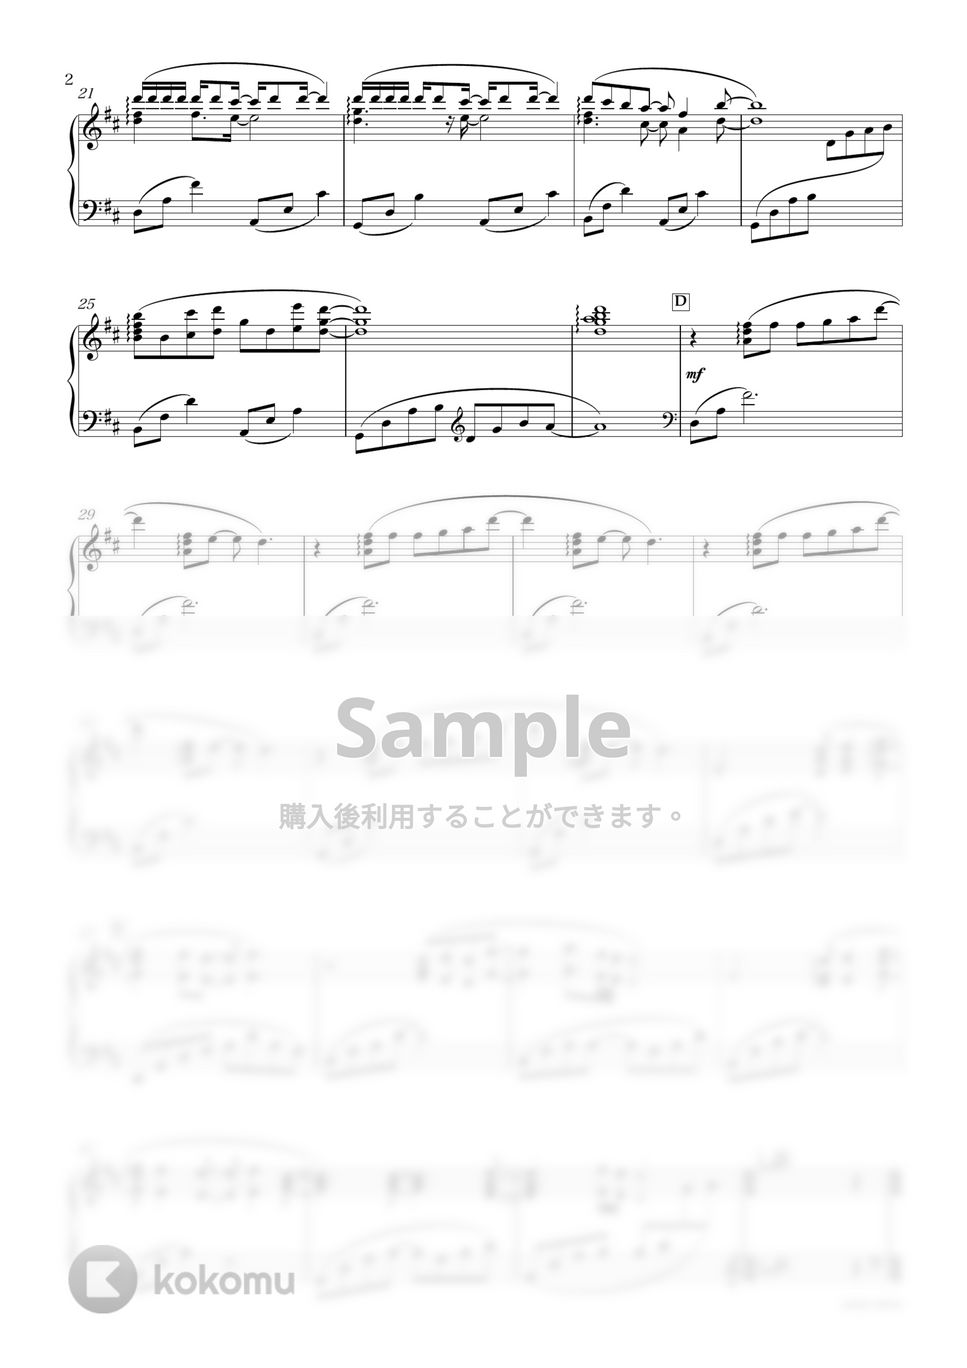 福山雅治 - 虹(Piano Version) by sammy